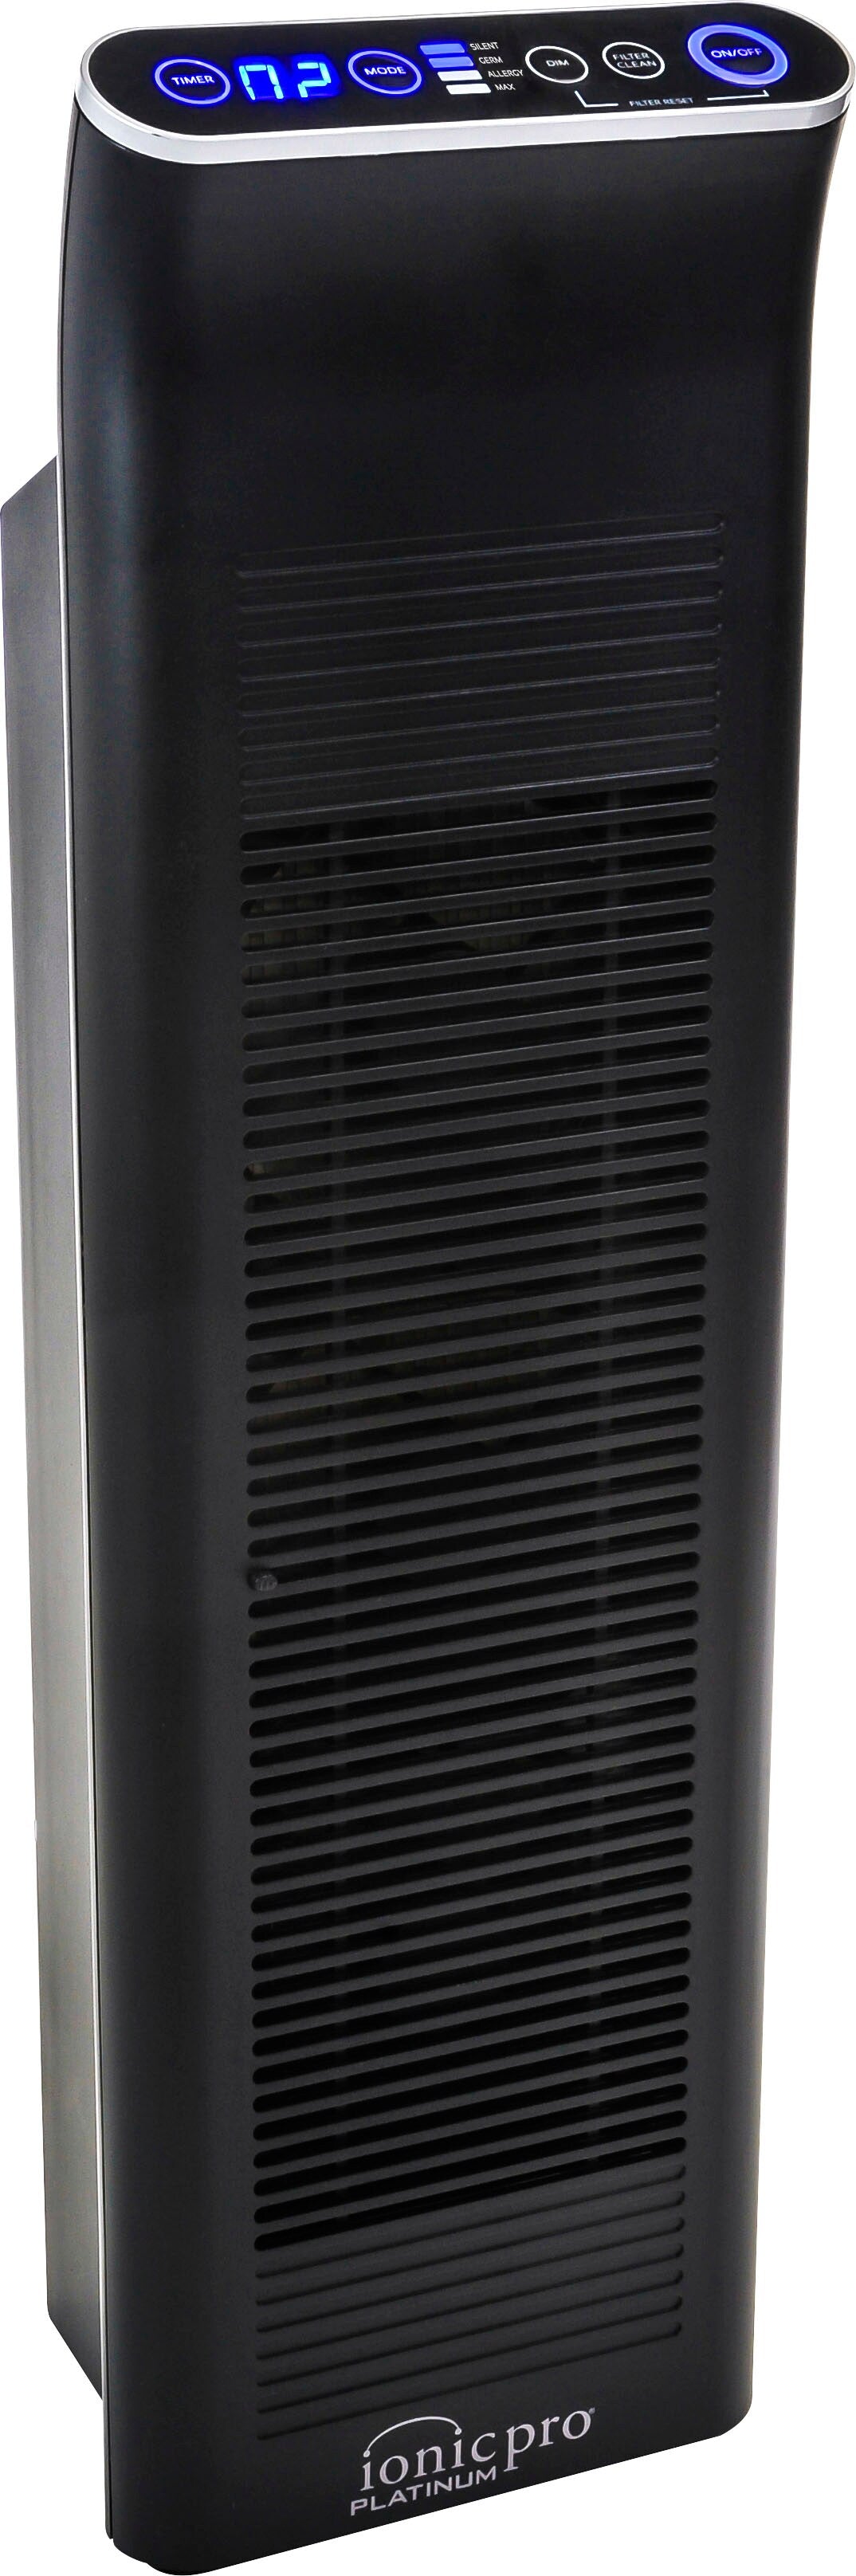 Envion - Ionic Pro Platinum TA750 Air Purifier - Black_5